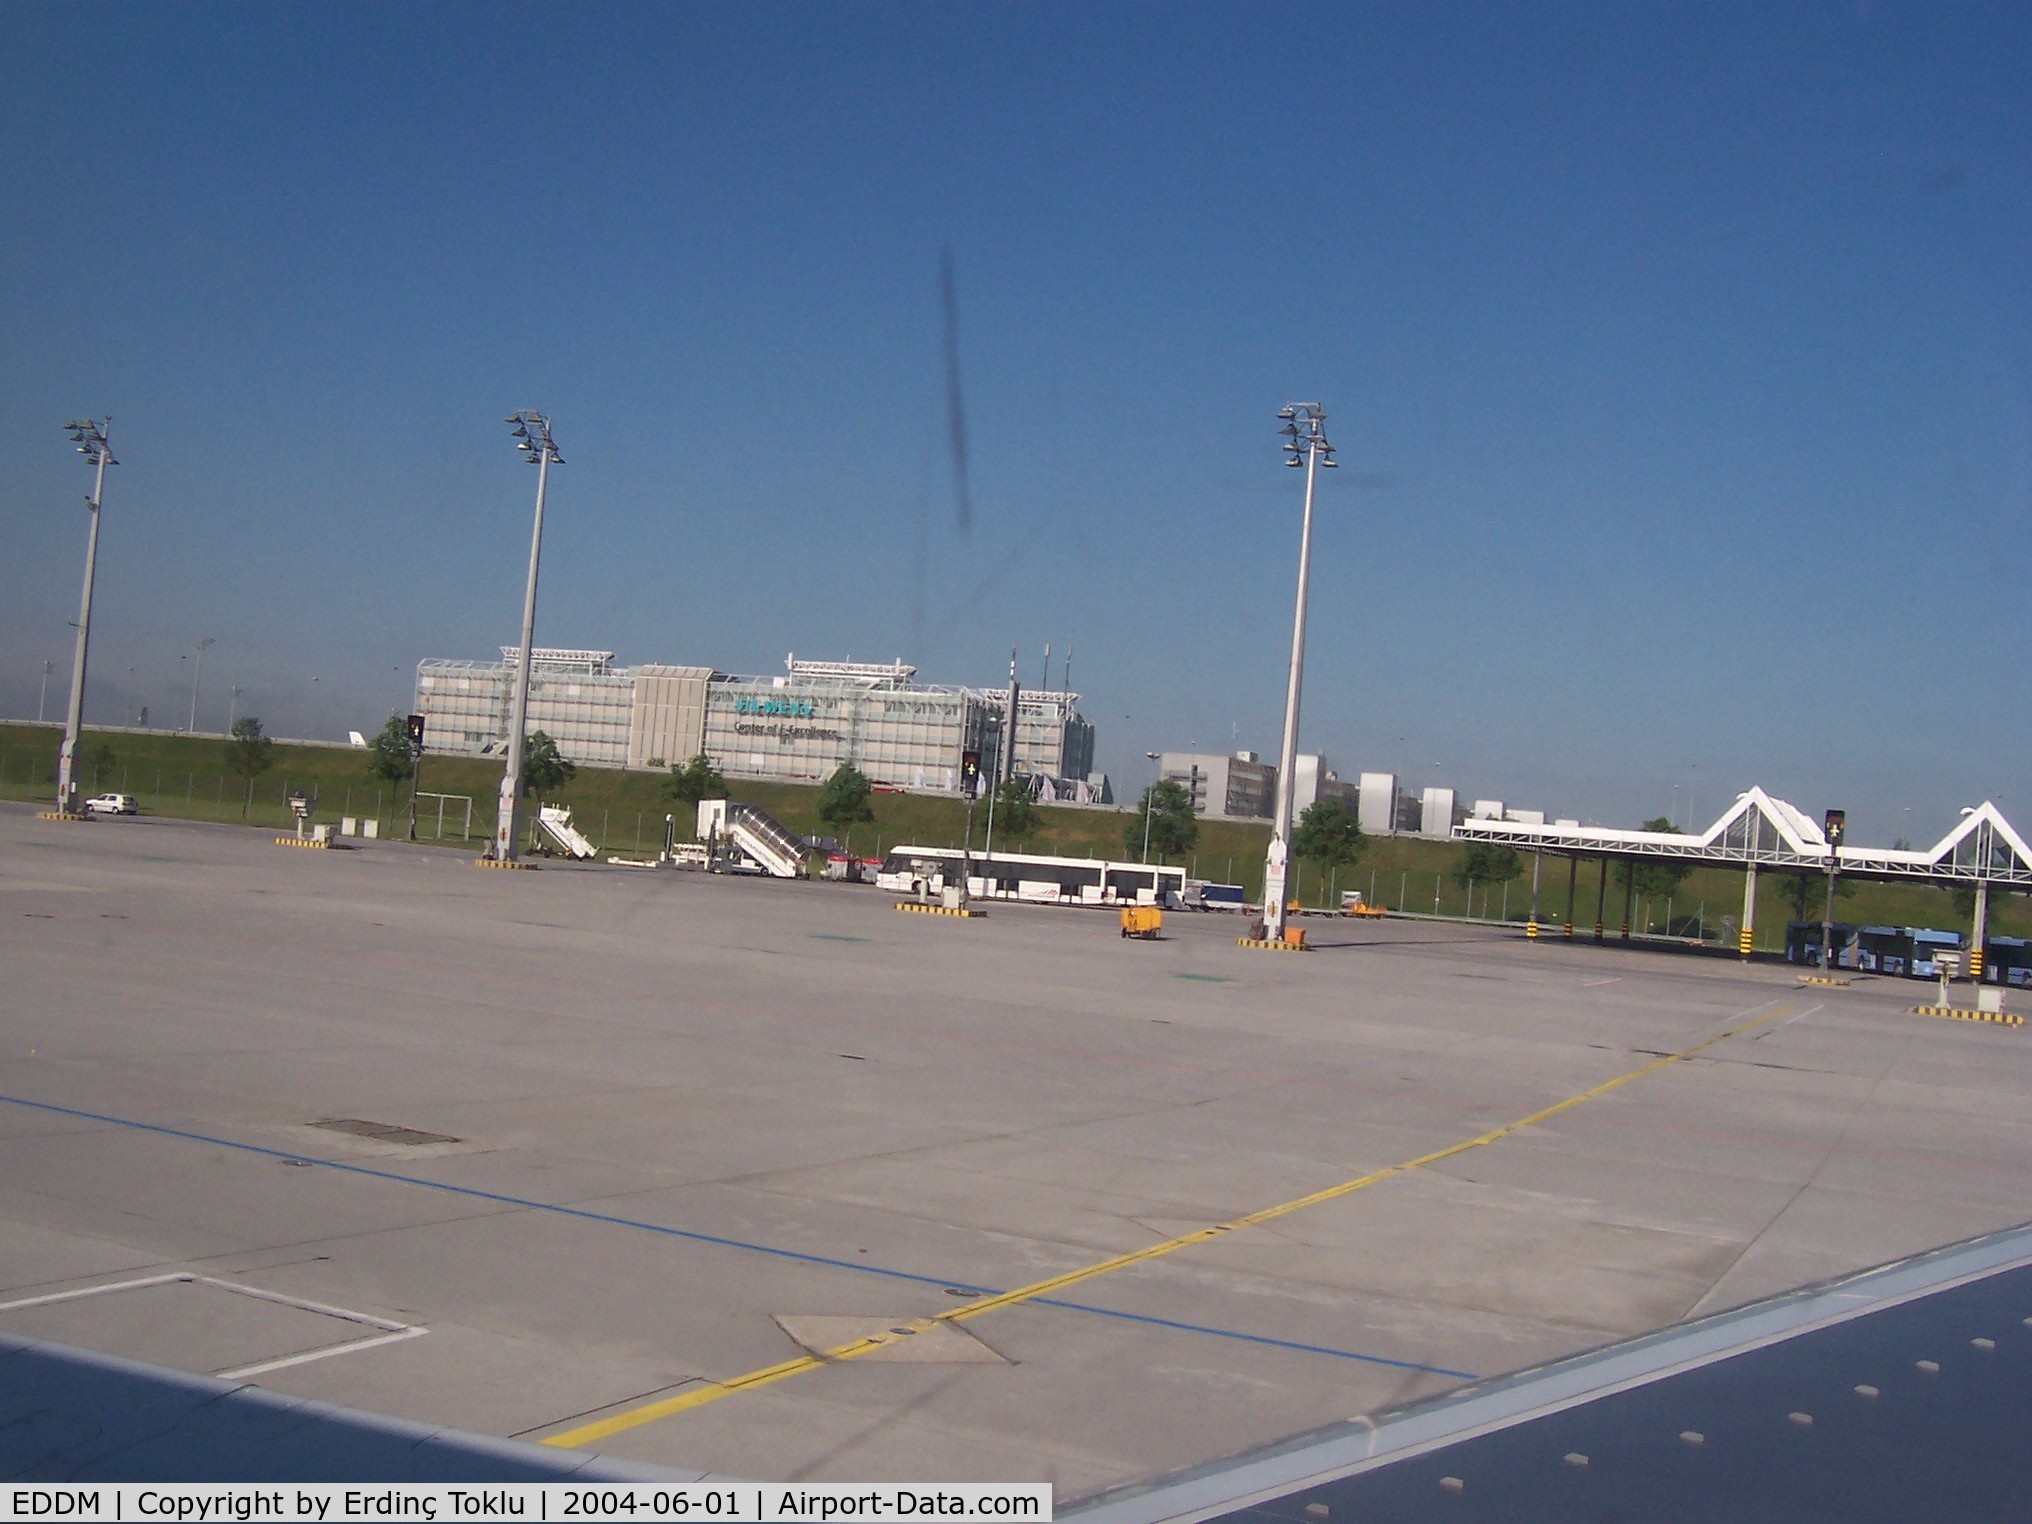 Munich International Airport (Franz Josef Strauß International Airport), Munich Germany (EDDM) - Siemens Excellence Center west of the airport